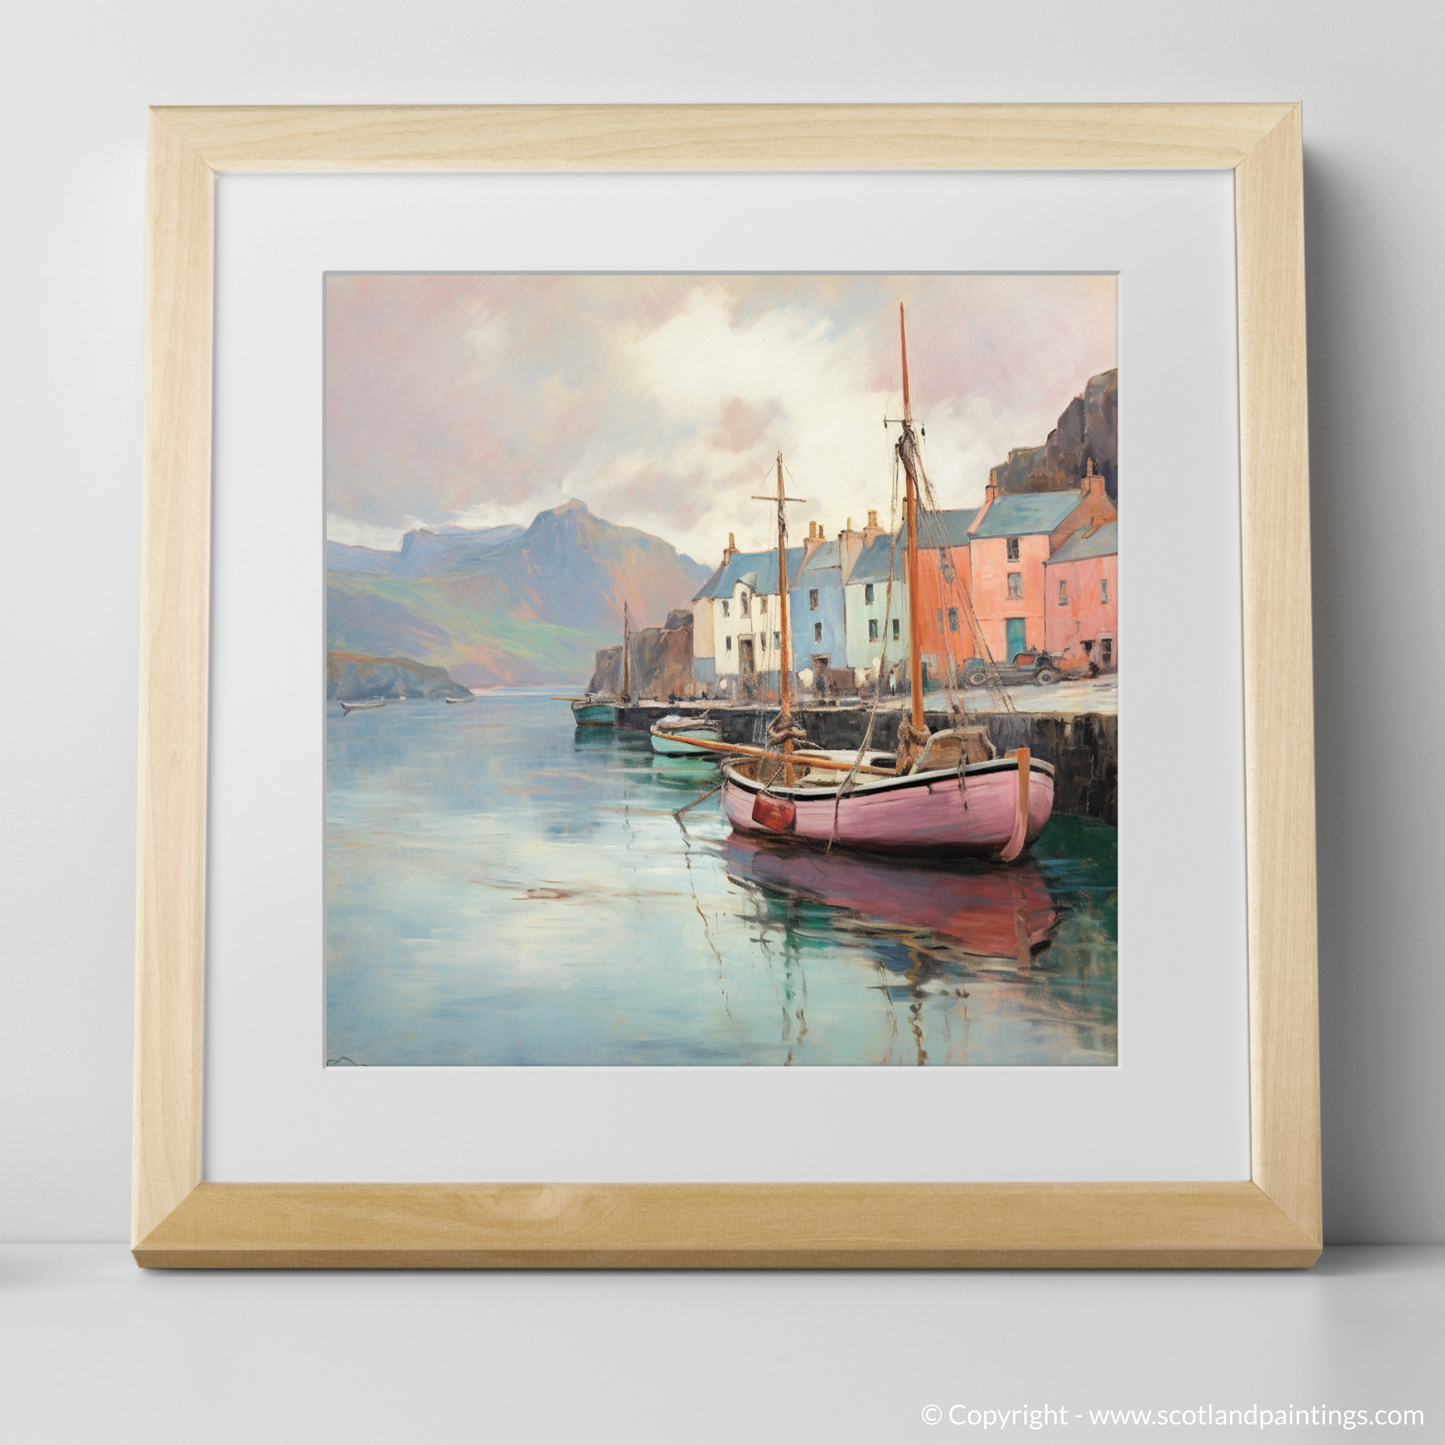 Serene Portree Harbour: An Impressionist Tribute to Scottish Coastal Life